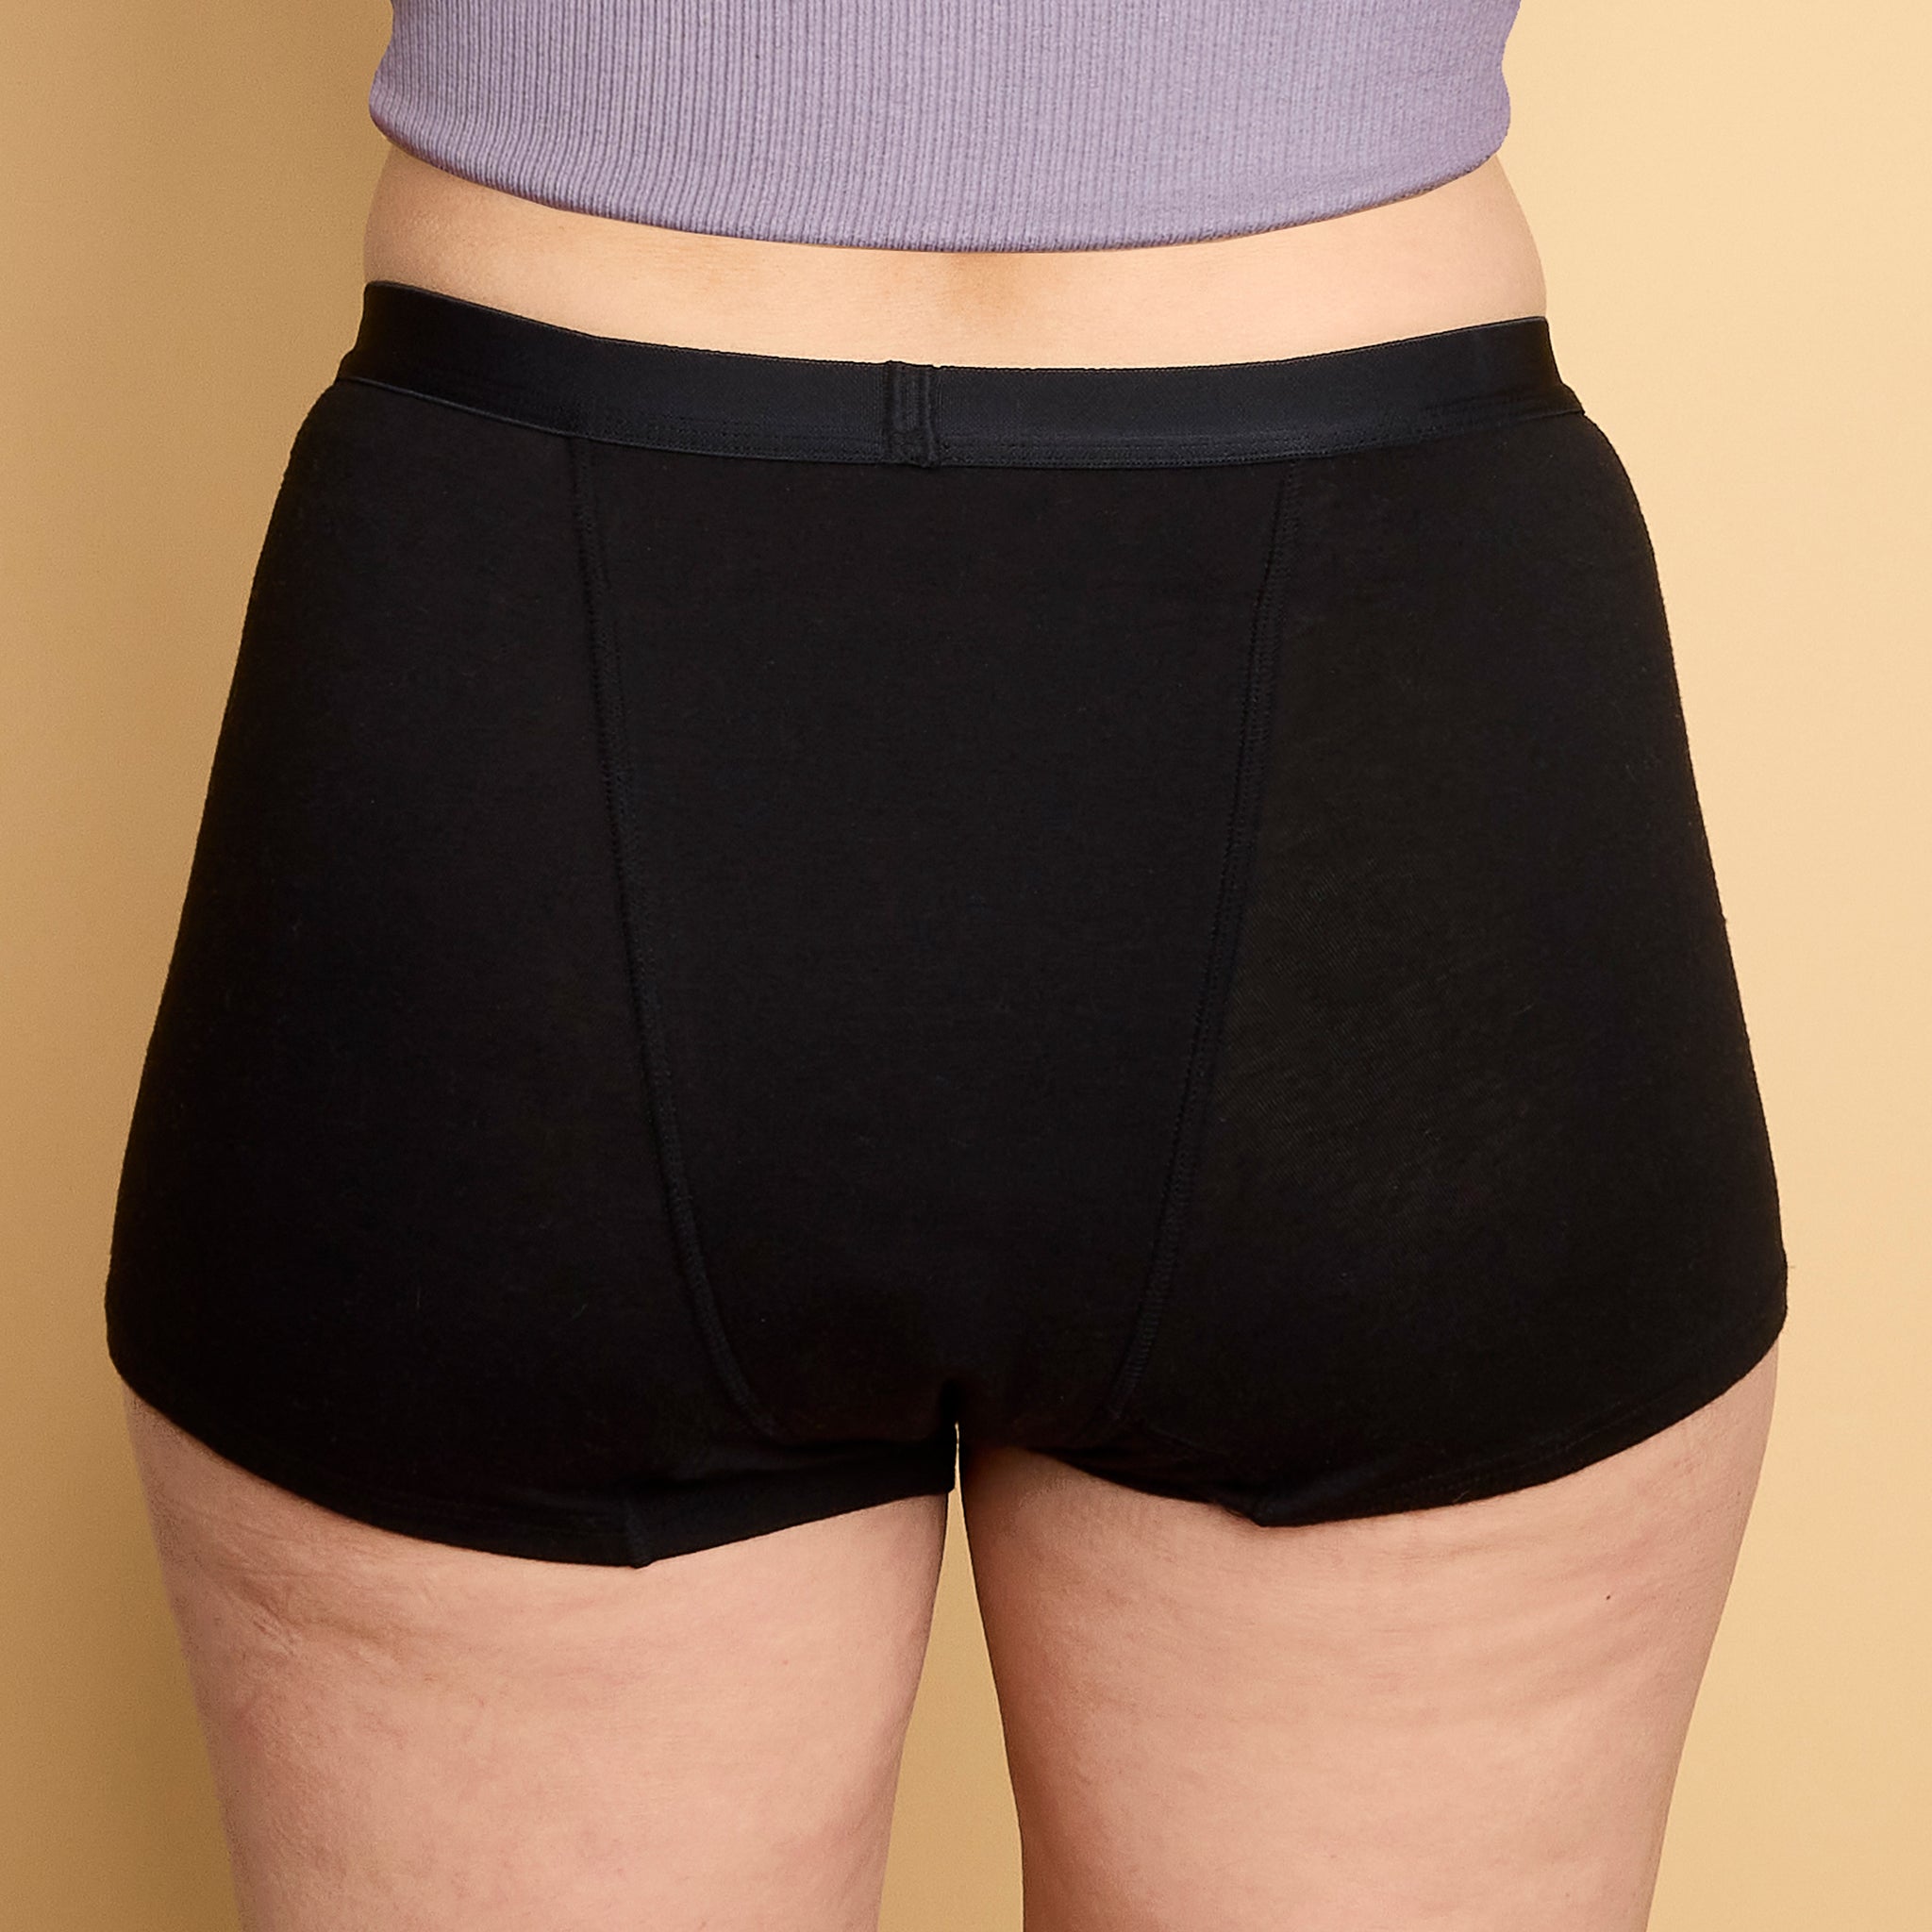 Boyshort Reusable Period Underwear, Period Panties